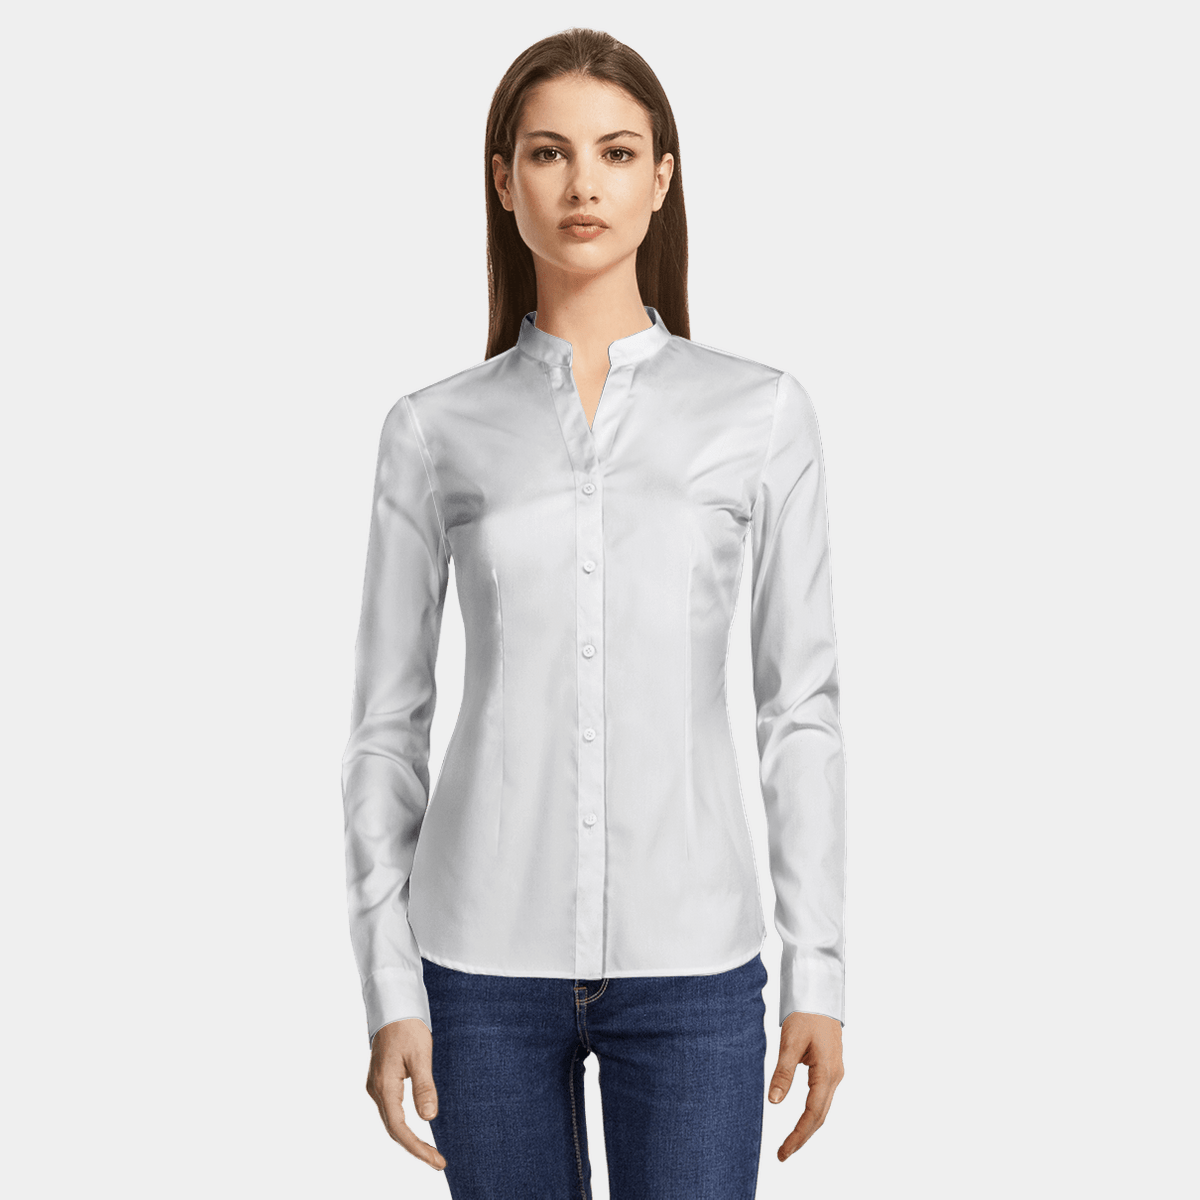 Women's White Button-Up Shirts Rack